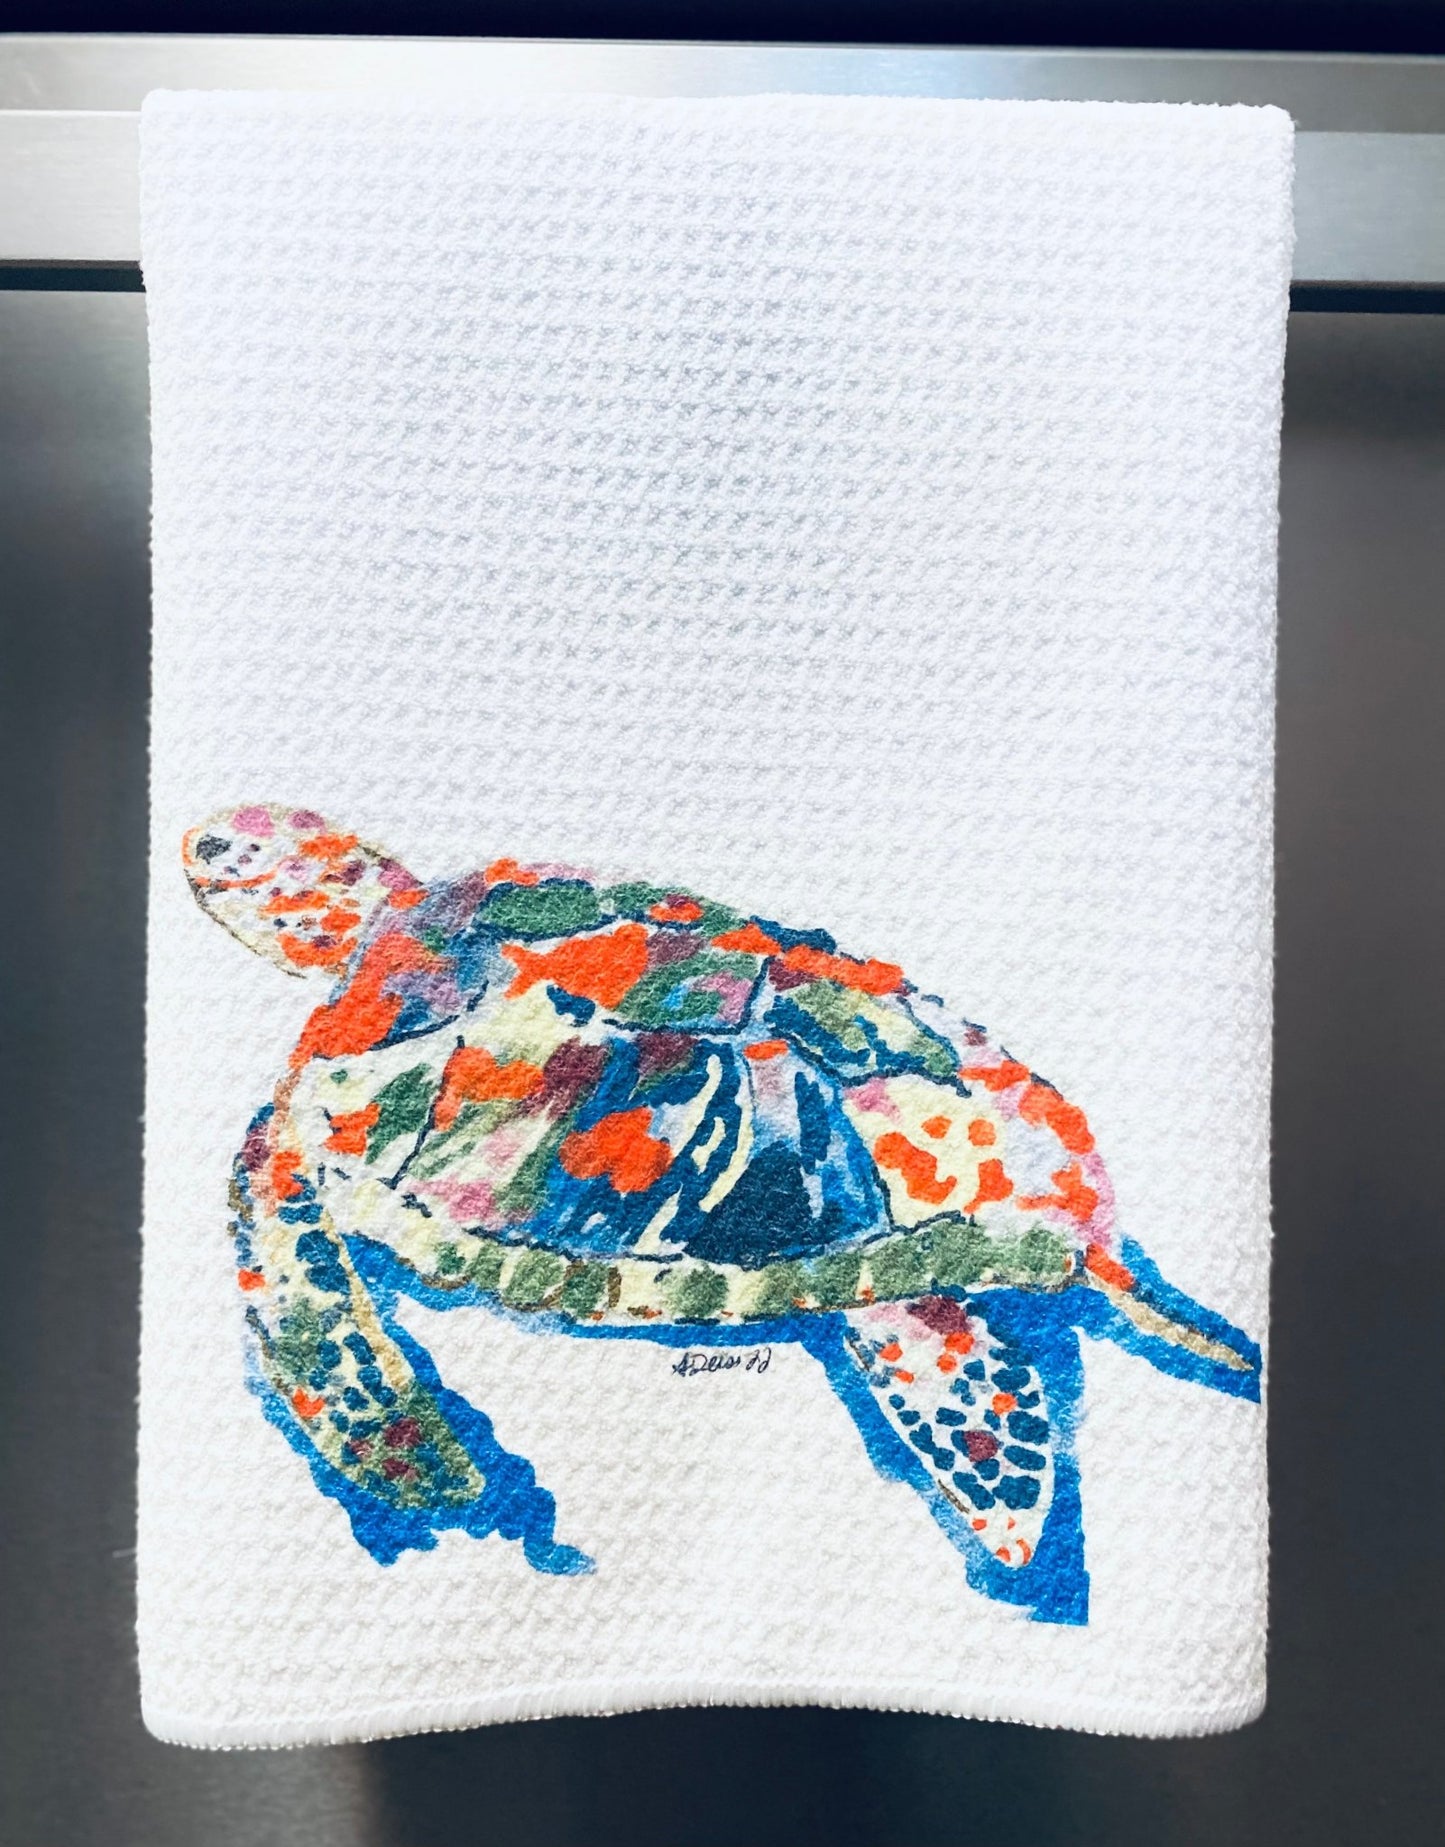 “Ranger Jr.” Turtle Microfiber Waffle Towel - Blue Cava